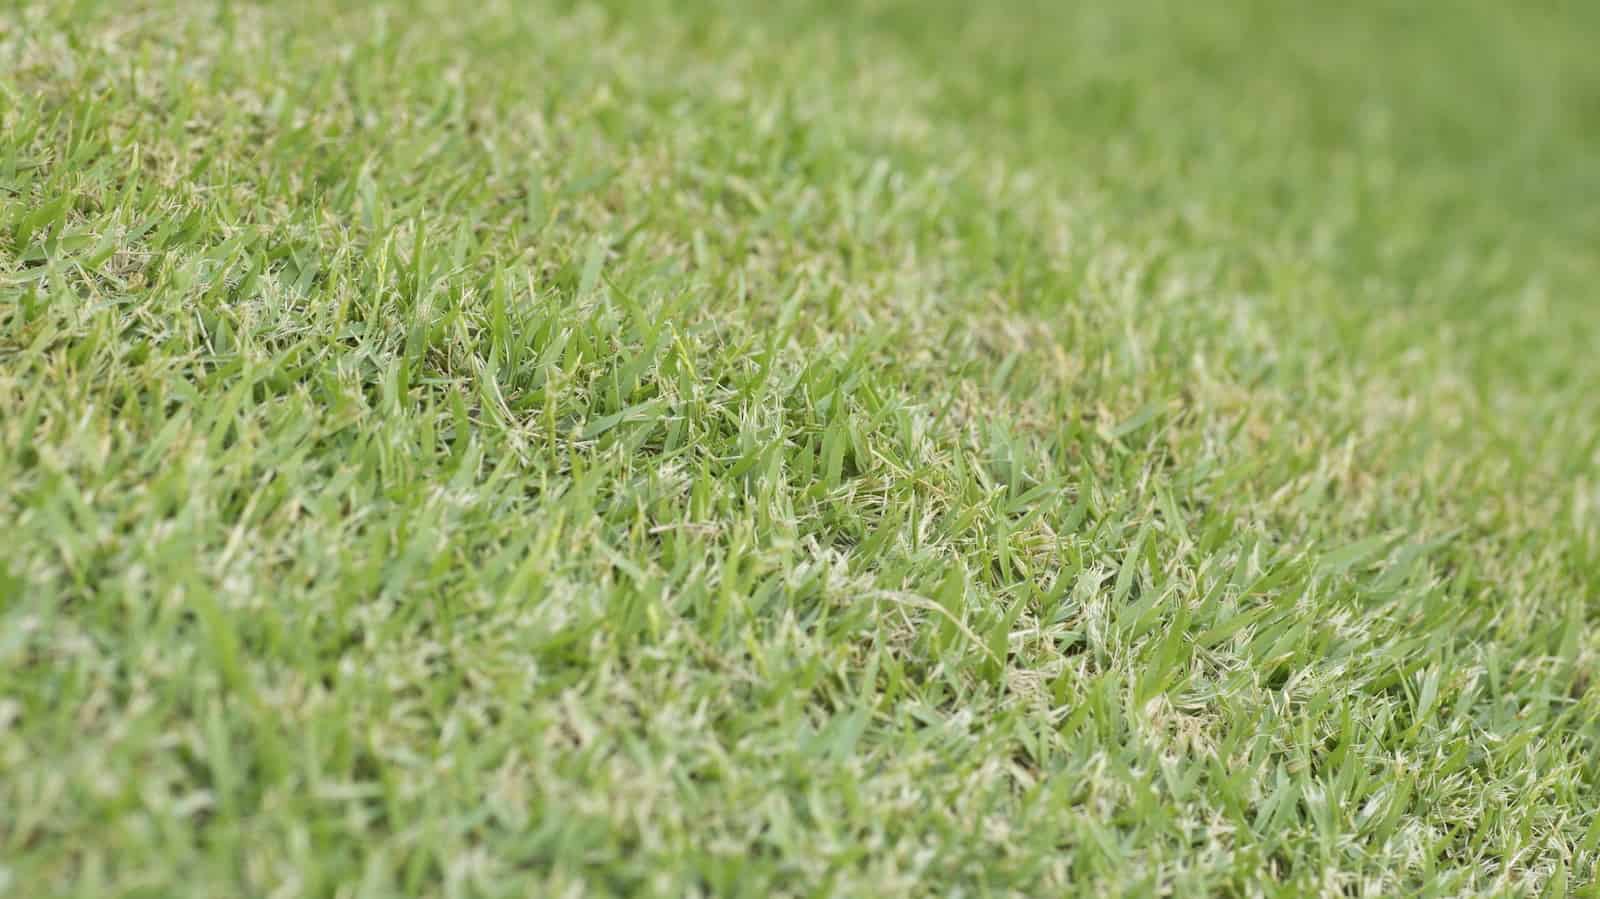 Mowed Bermuda Grass or Cynodon dactylon